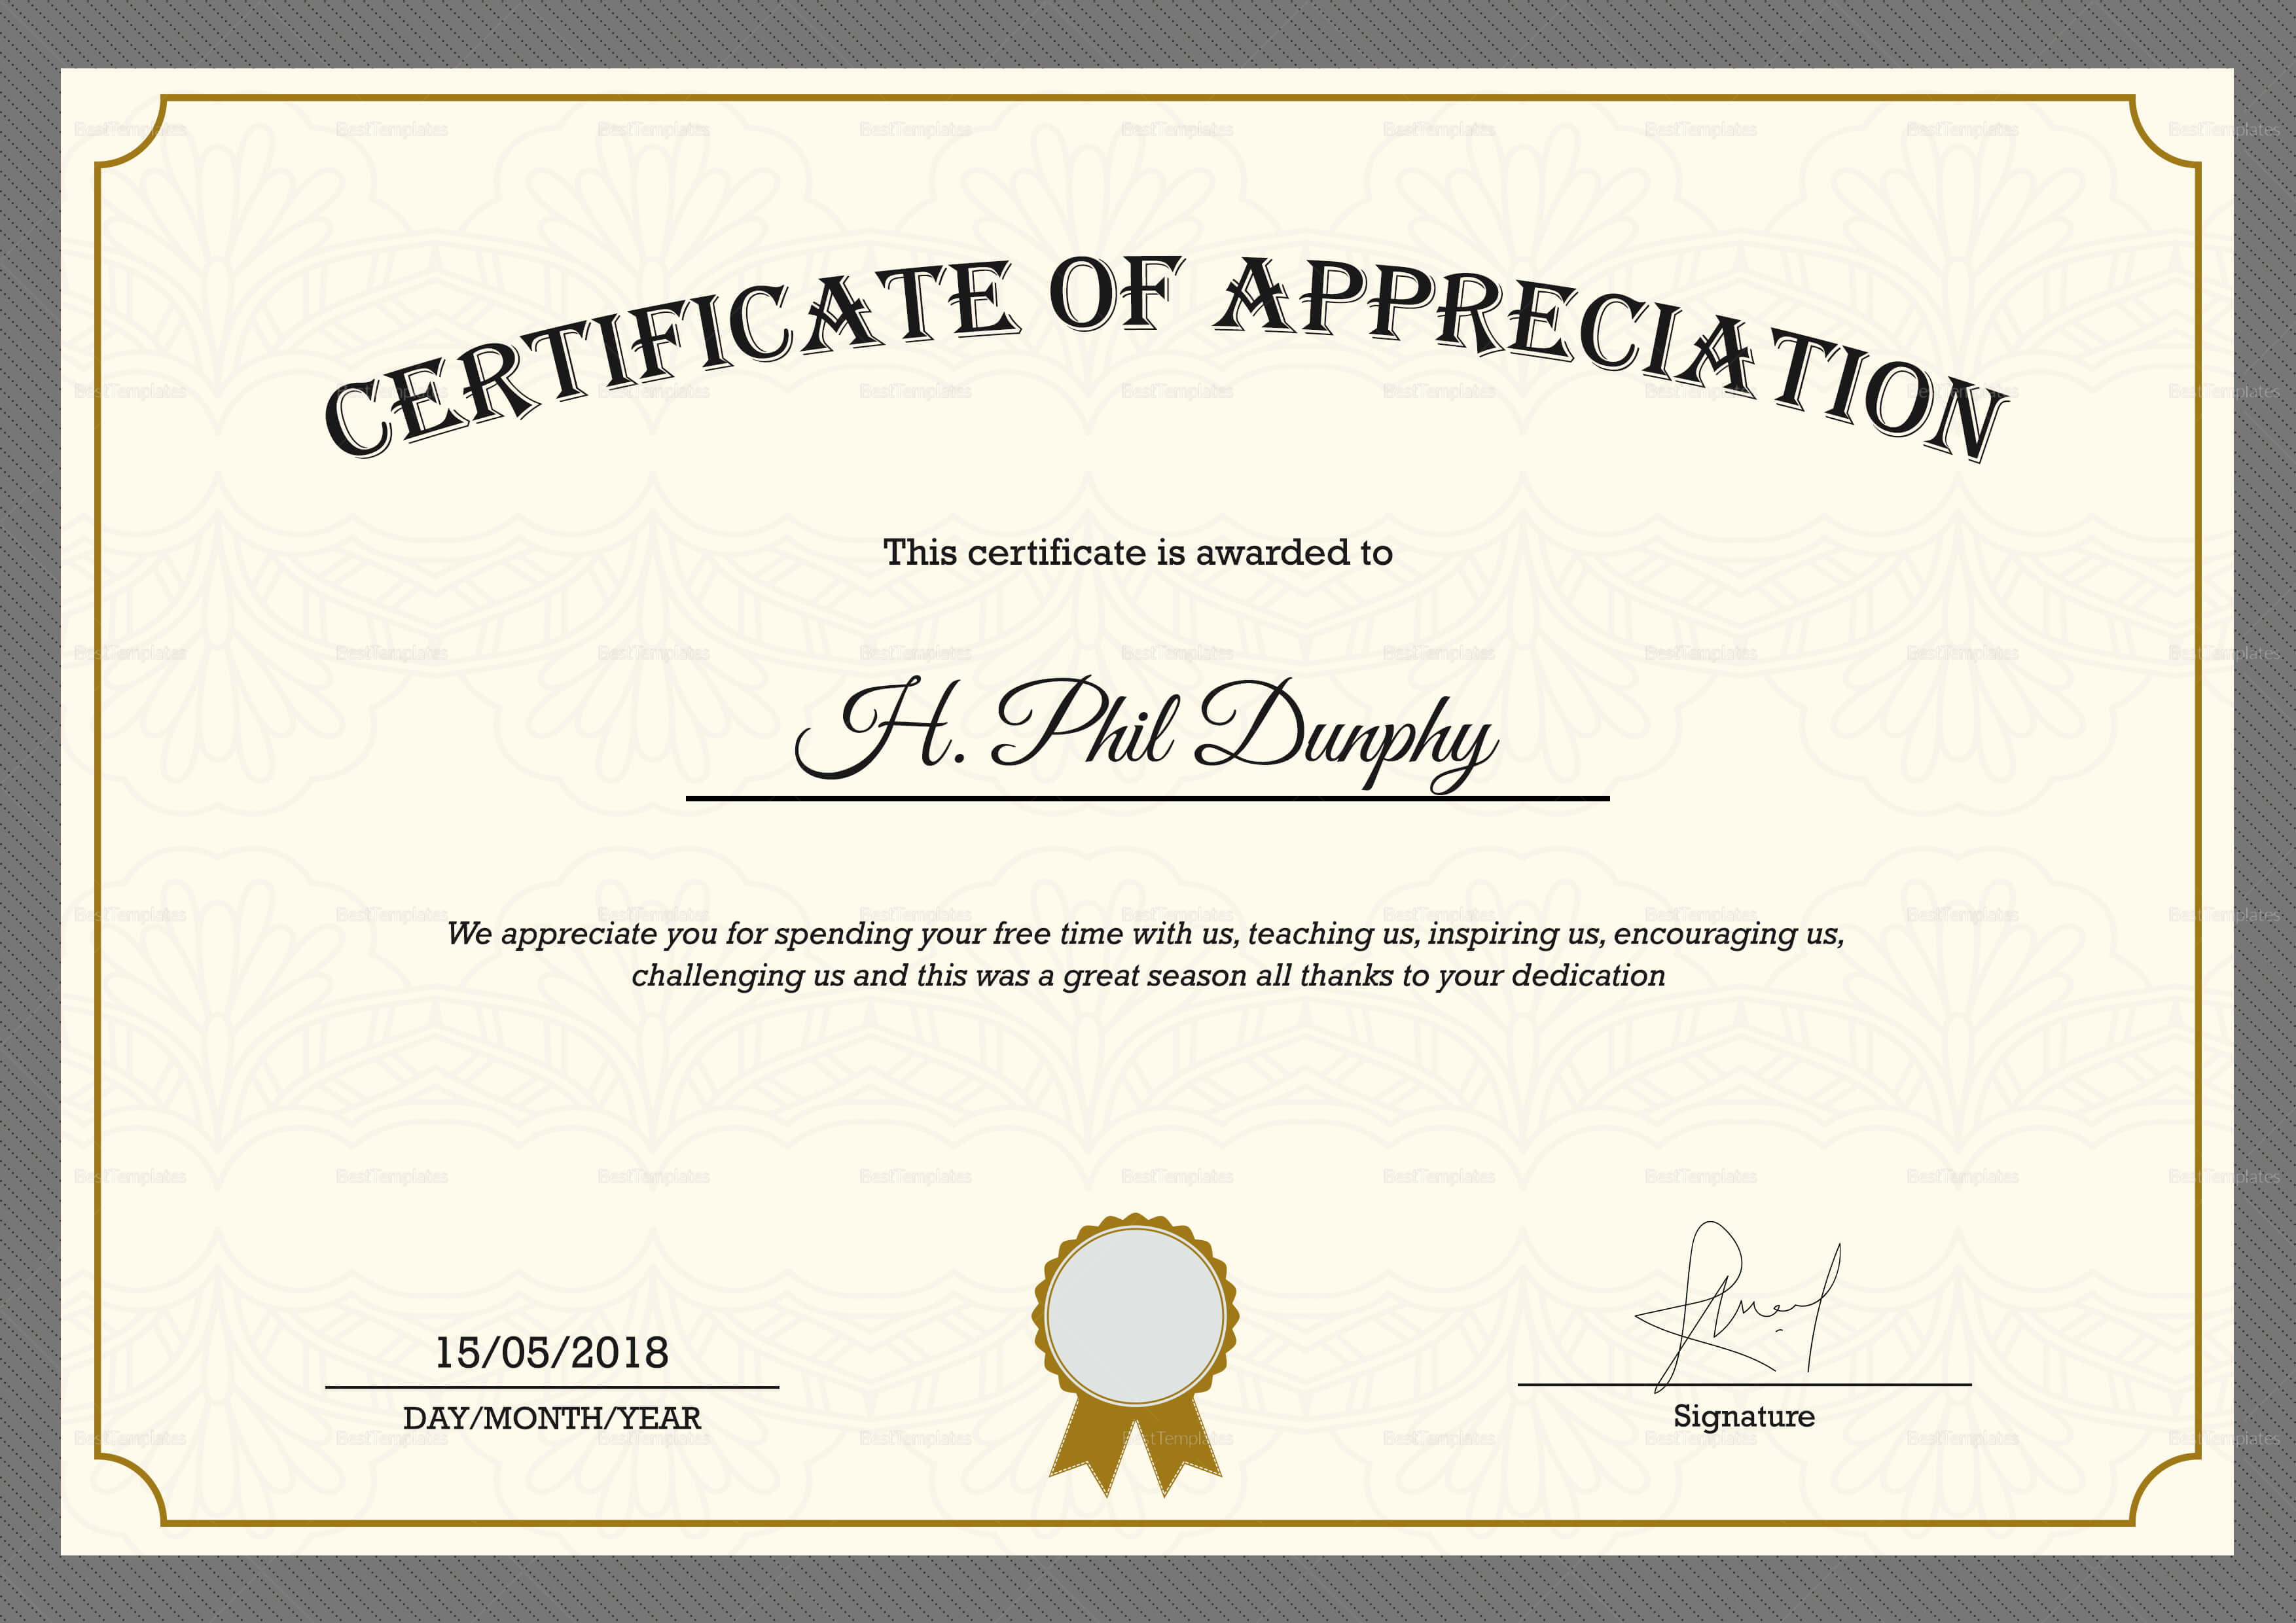 Sample Company Appreciation Certificate Template For In Appreciation Certificate Templates